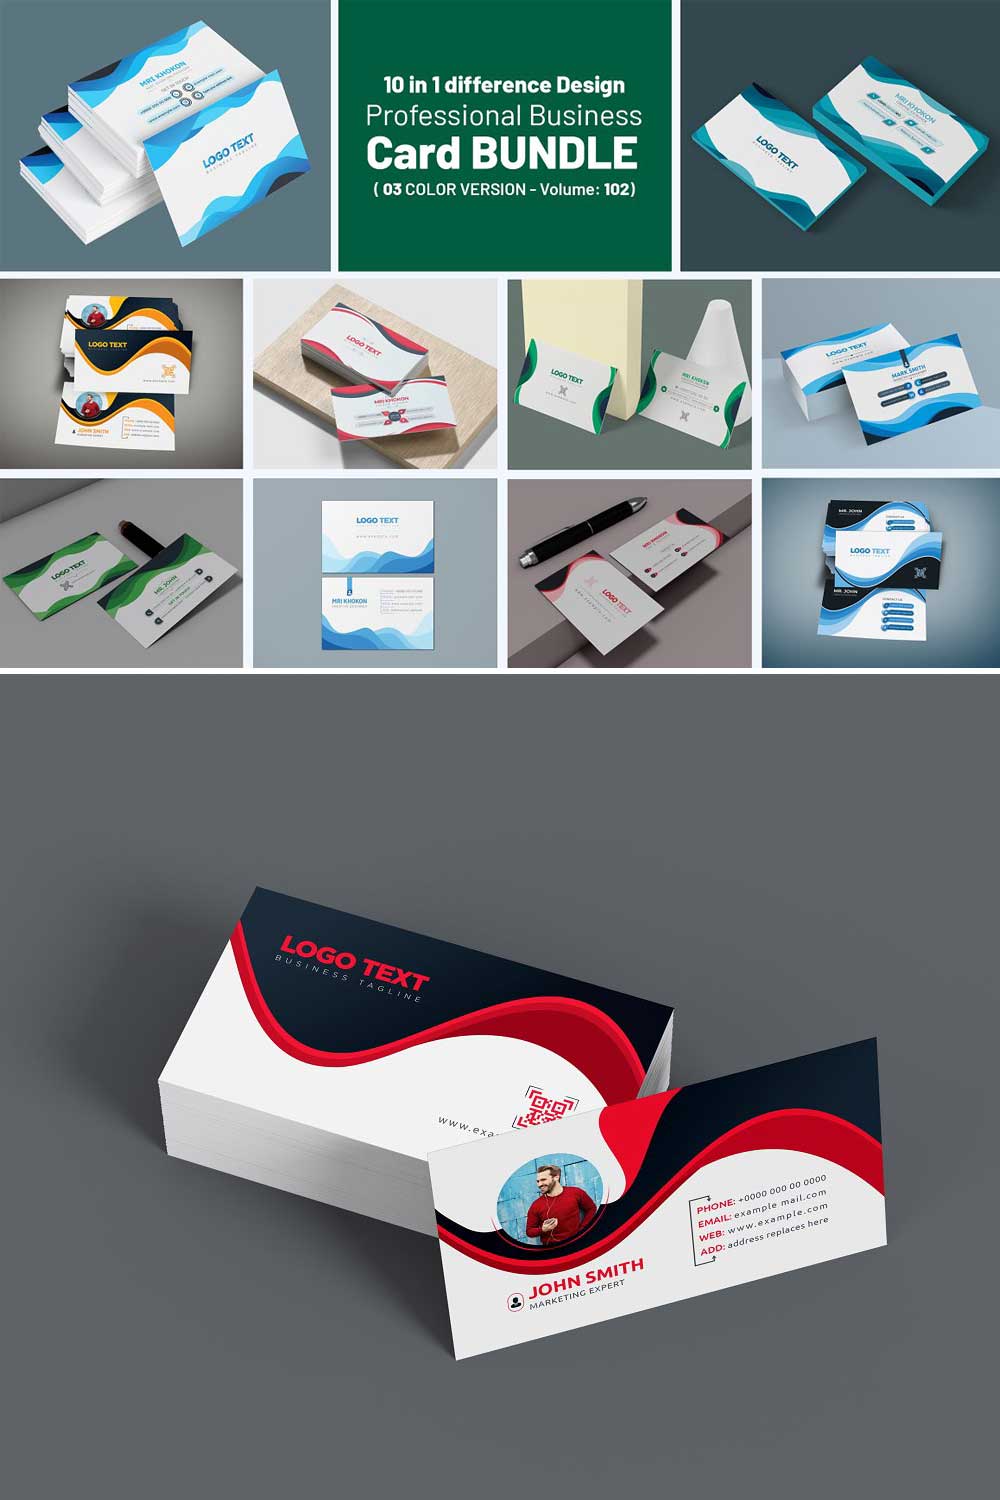 Professional Business Card Bundle pinterest preview image.